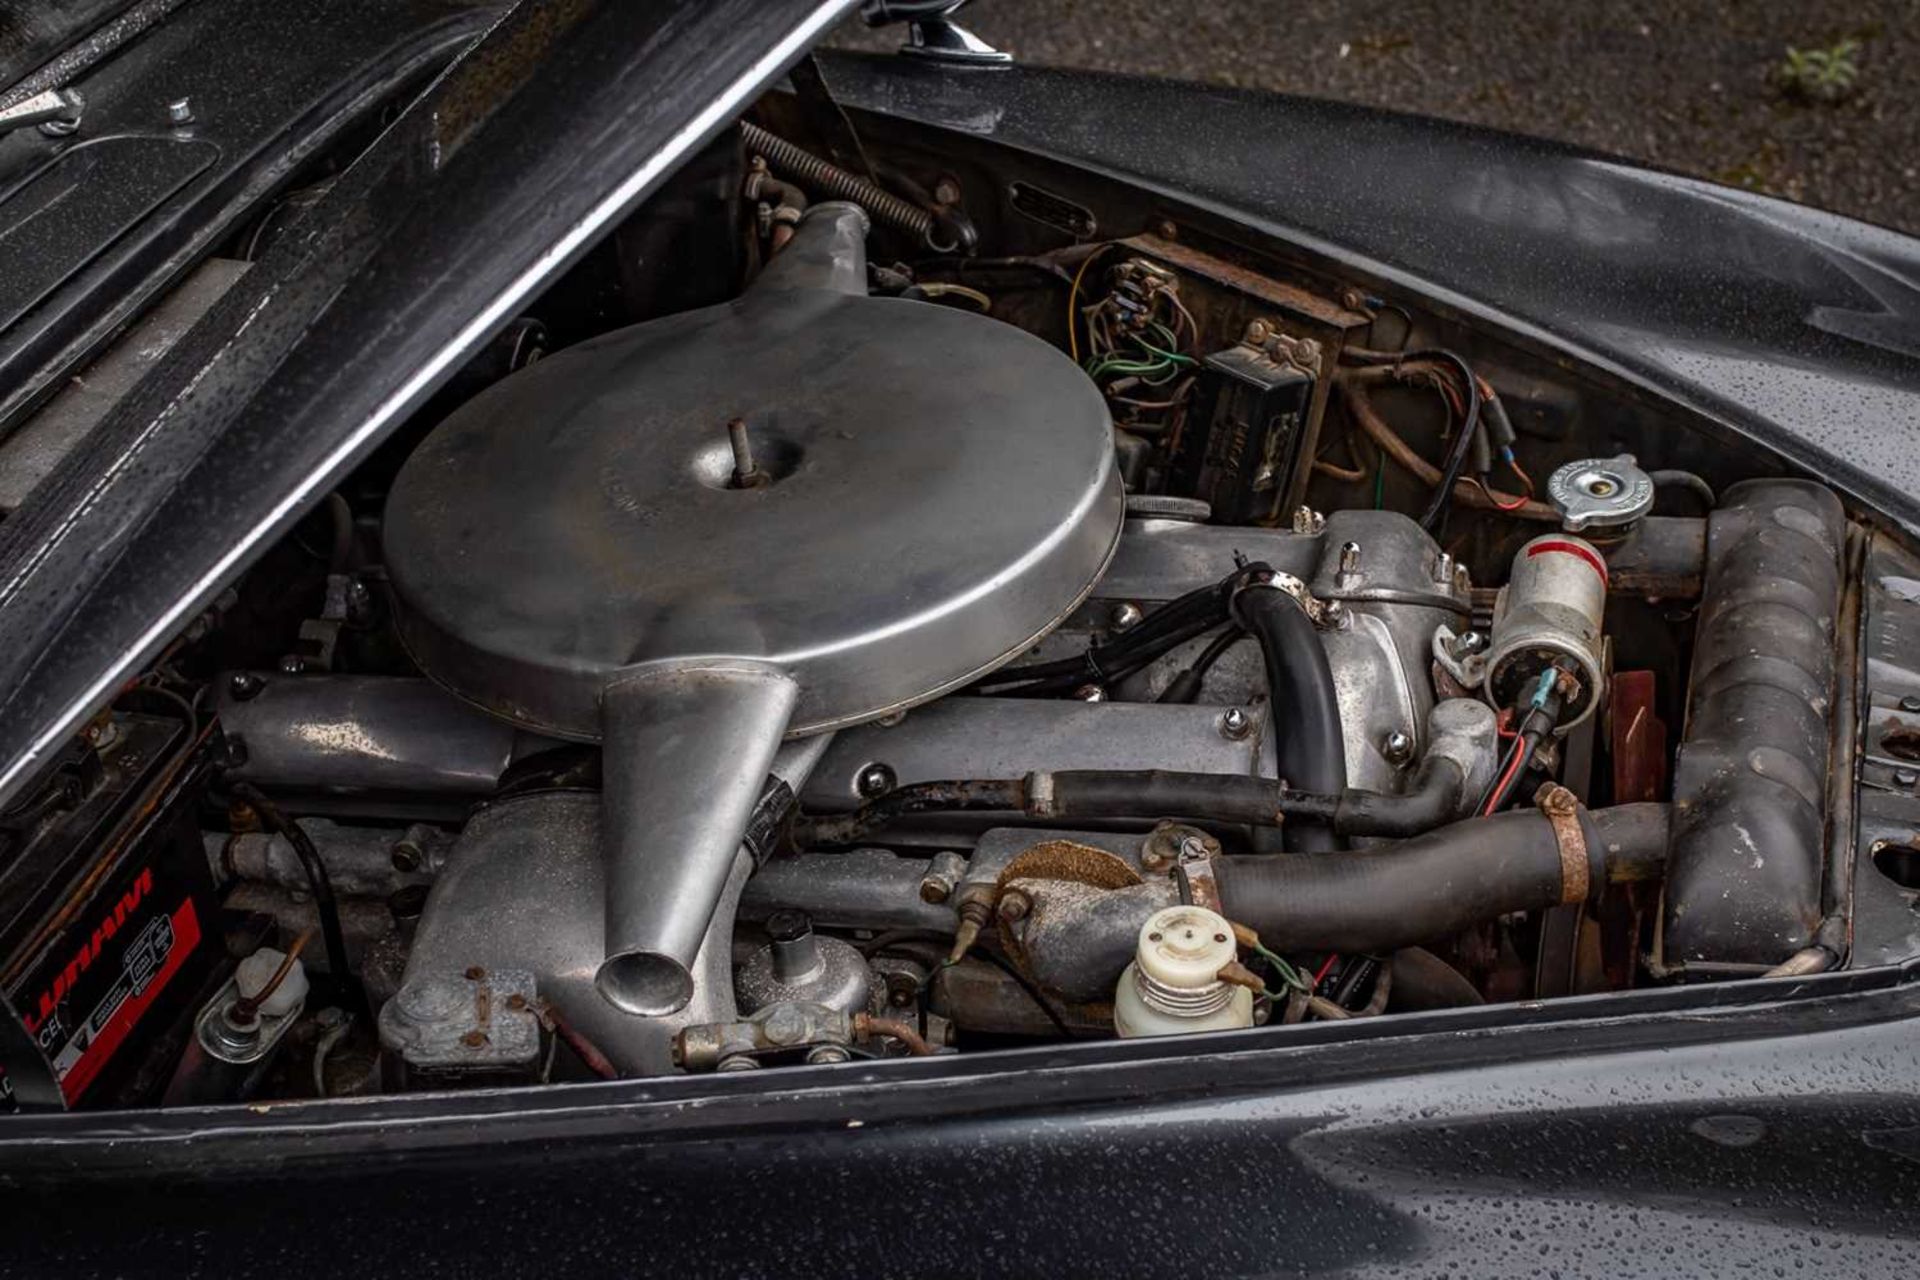 1964 Jaguar MKII 3.4 Upgraded to 3.8 Litre - Image 68 of 97